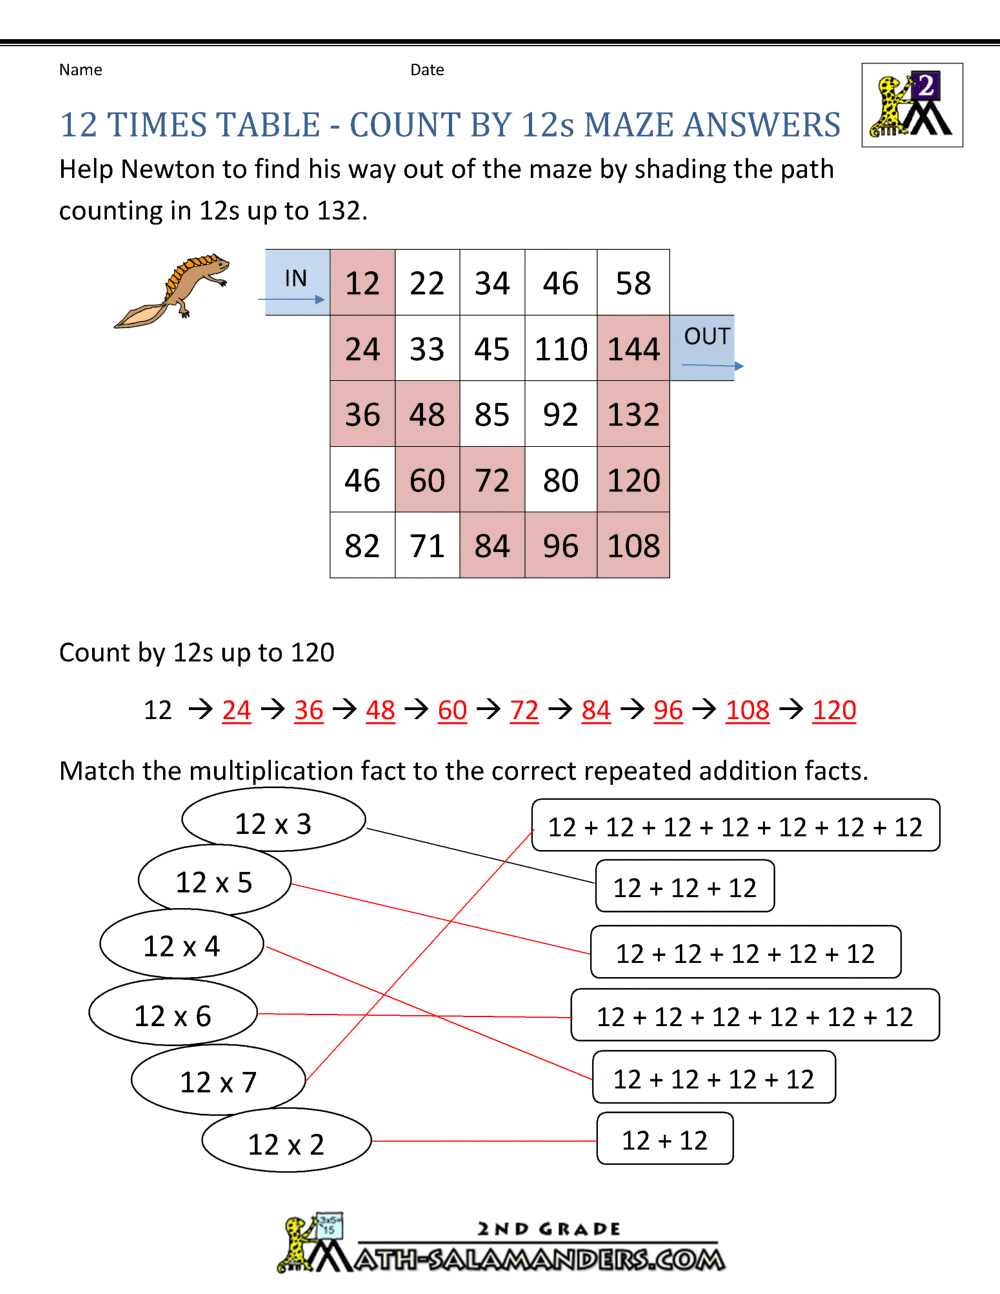 multiply-by-9-worksheet